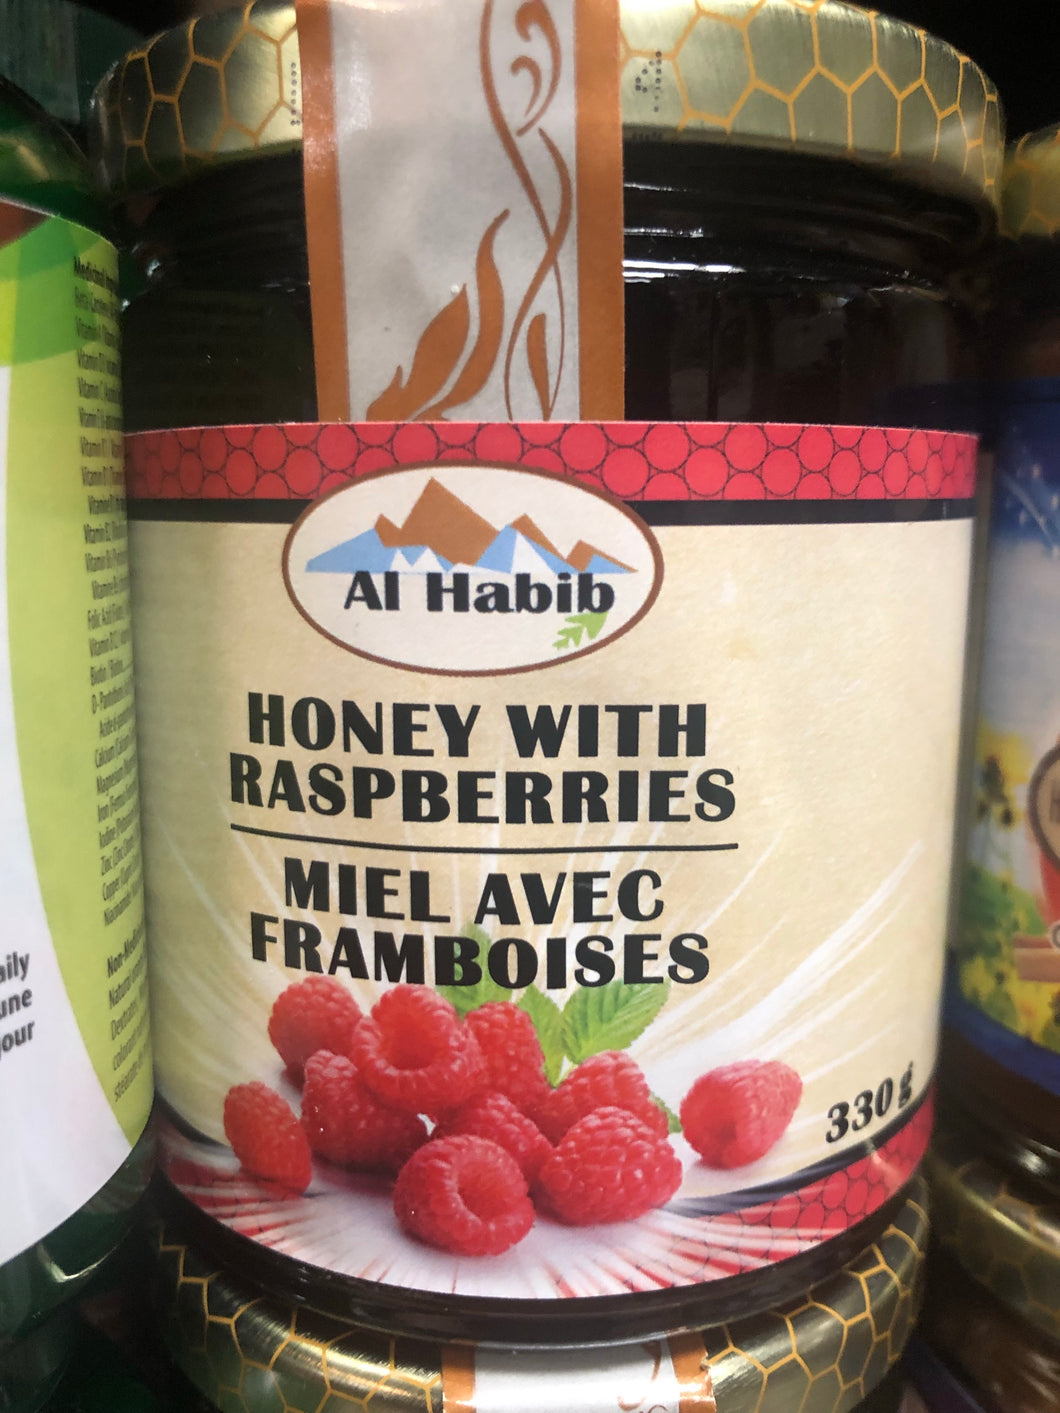 Al Habib Honey with Raspberries